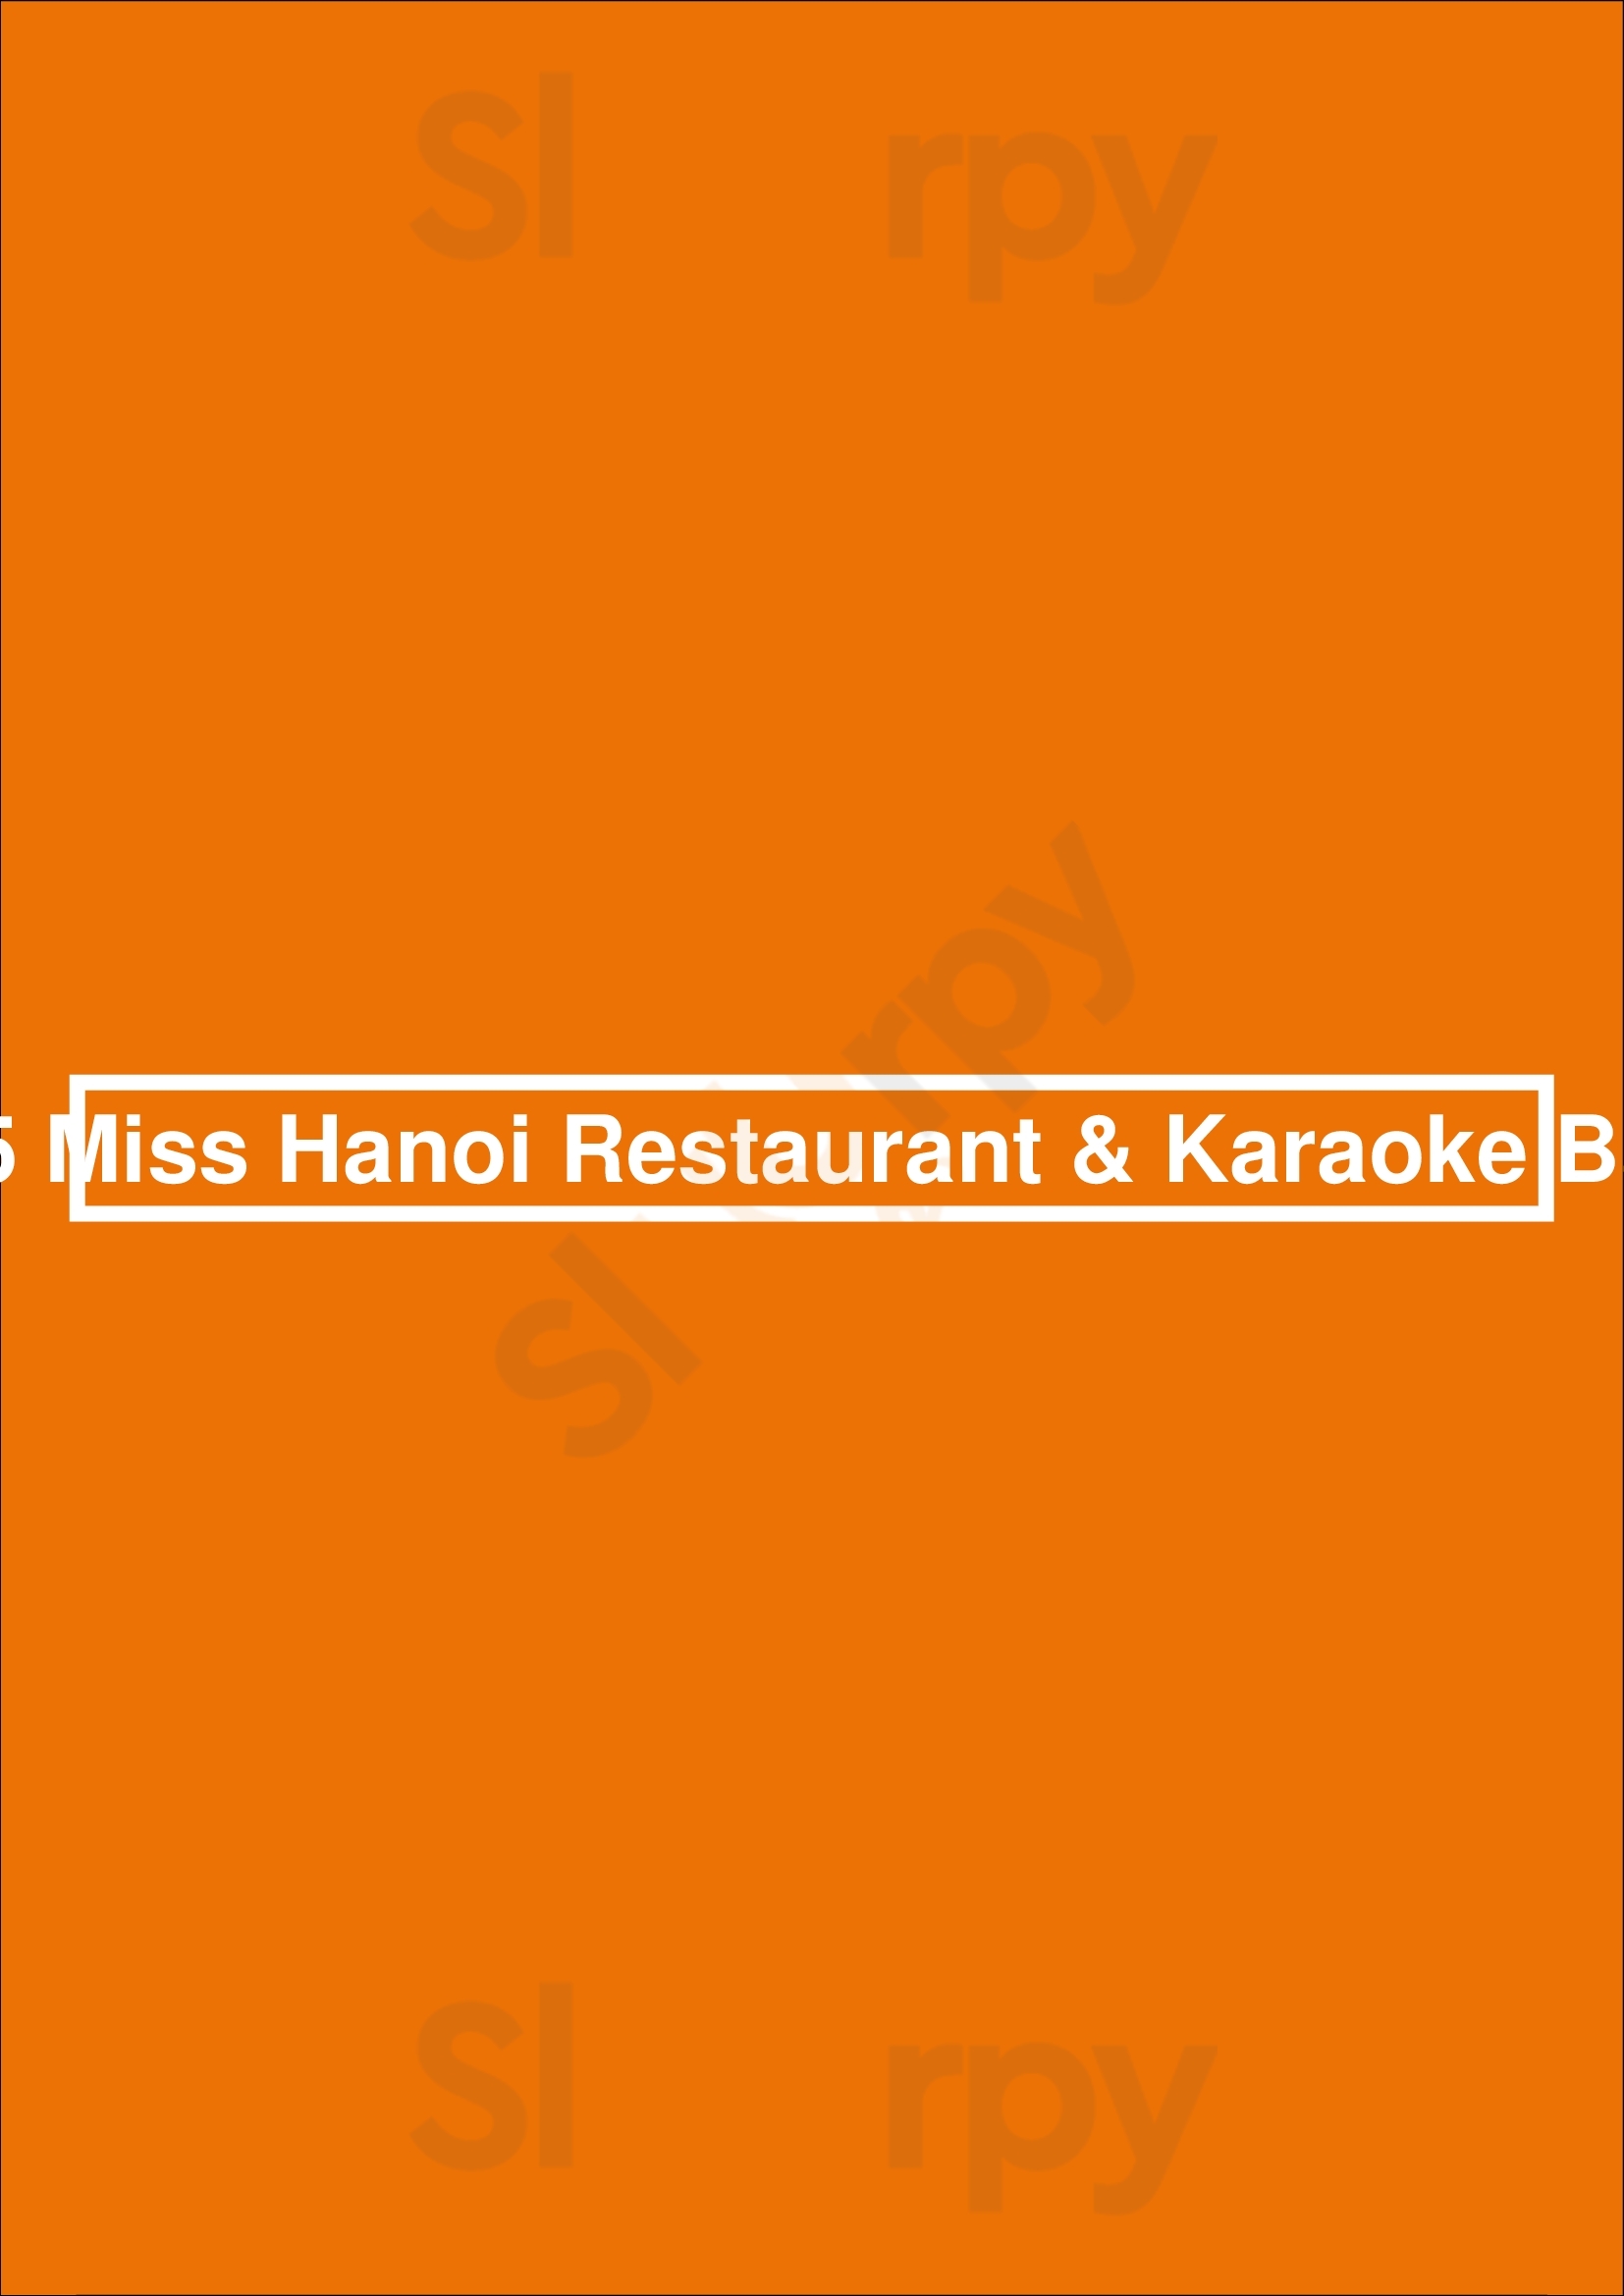 15 Miss Hanoi Restaurant & Karaoke Bar Adelaide Menu - 1